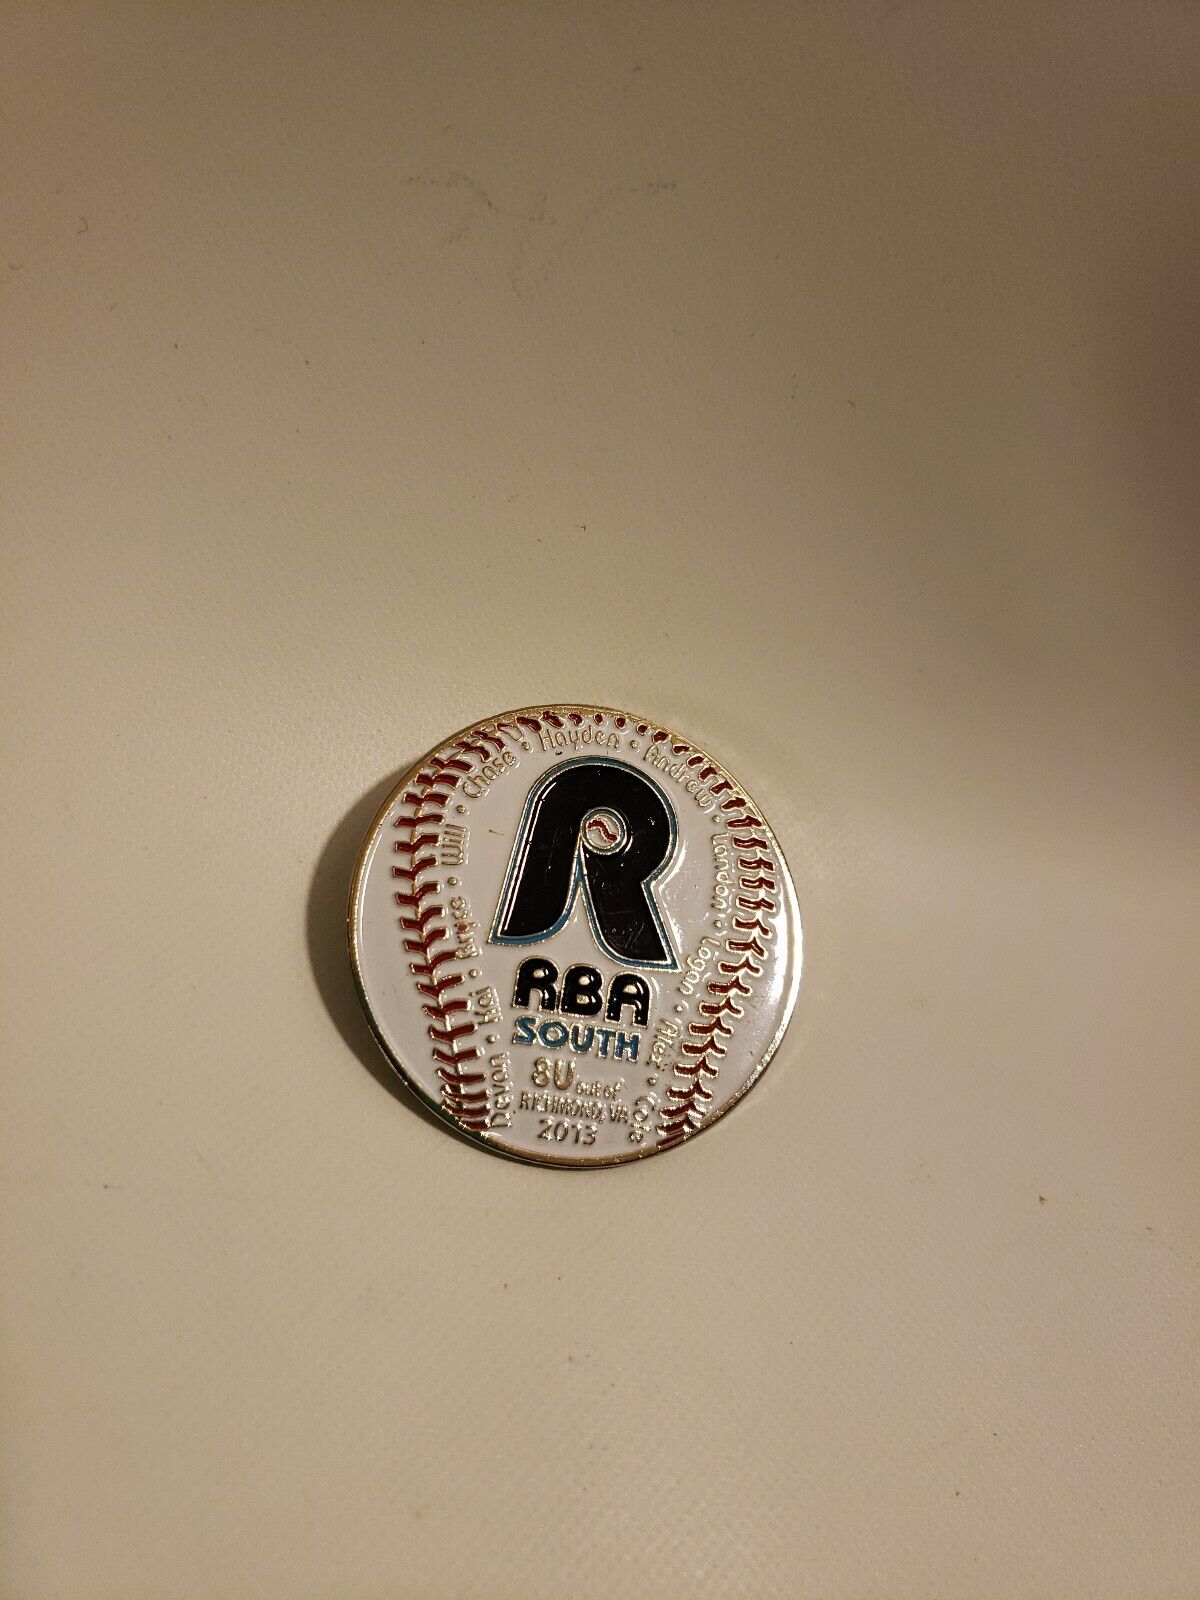 Rba South 8u Richmond Virginia Baseball Team Club One Post Pin